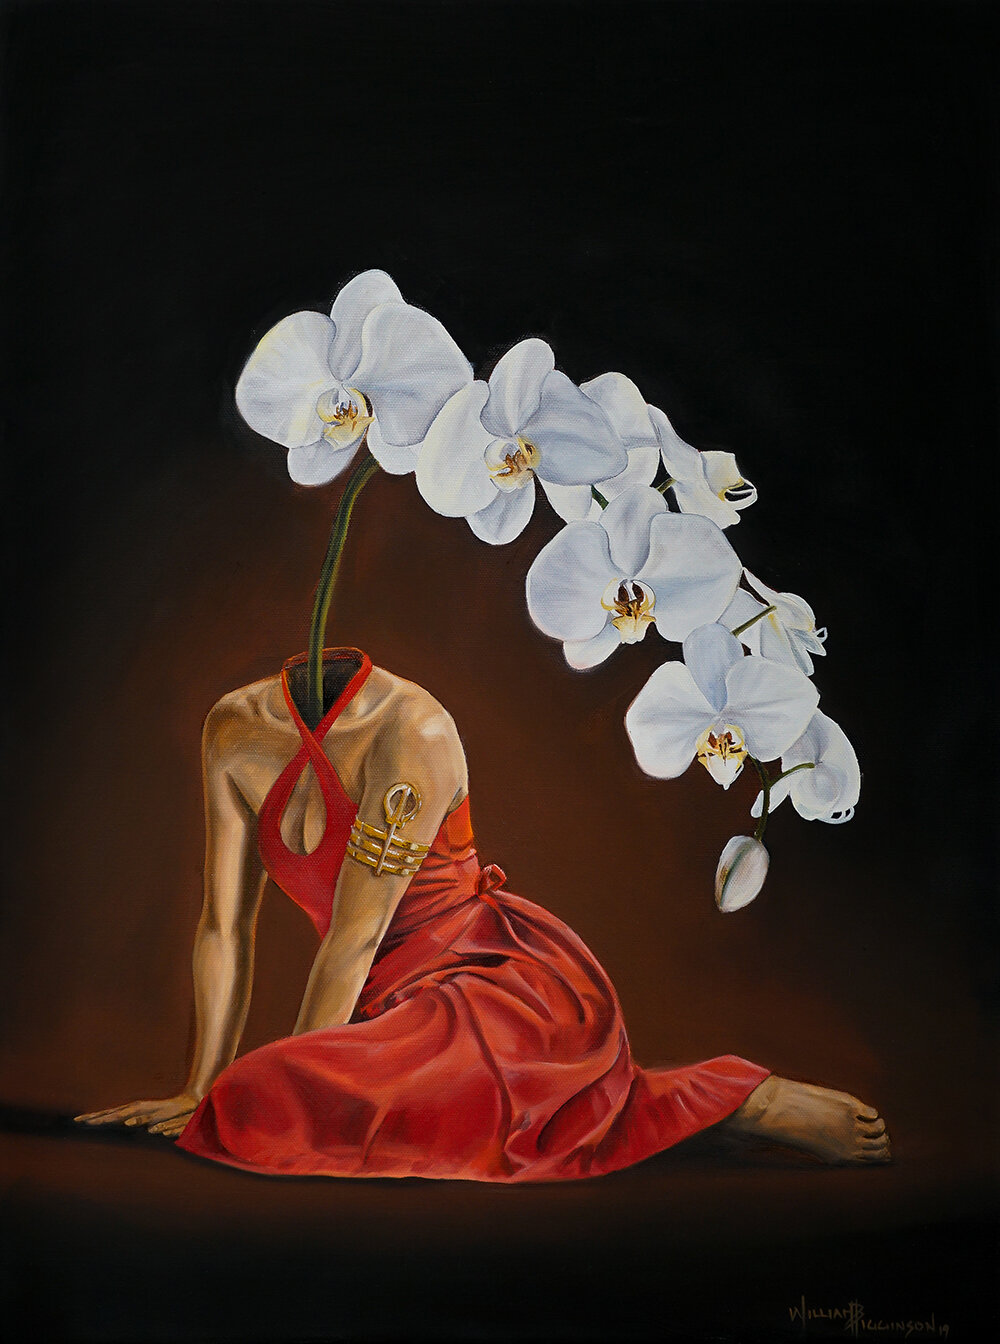 william d higginson orchid liam commission web res.jpg